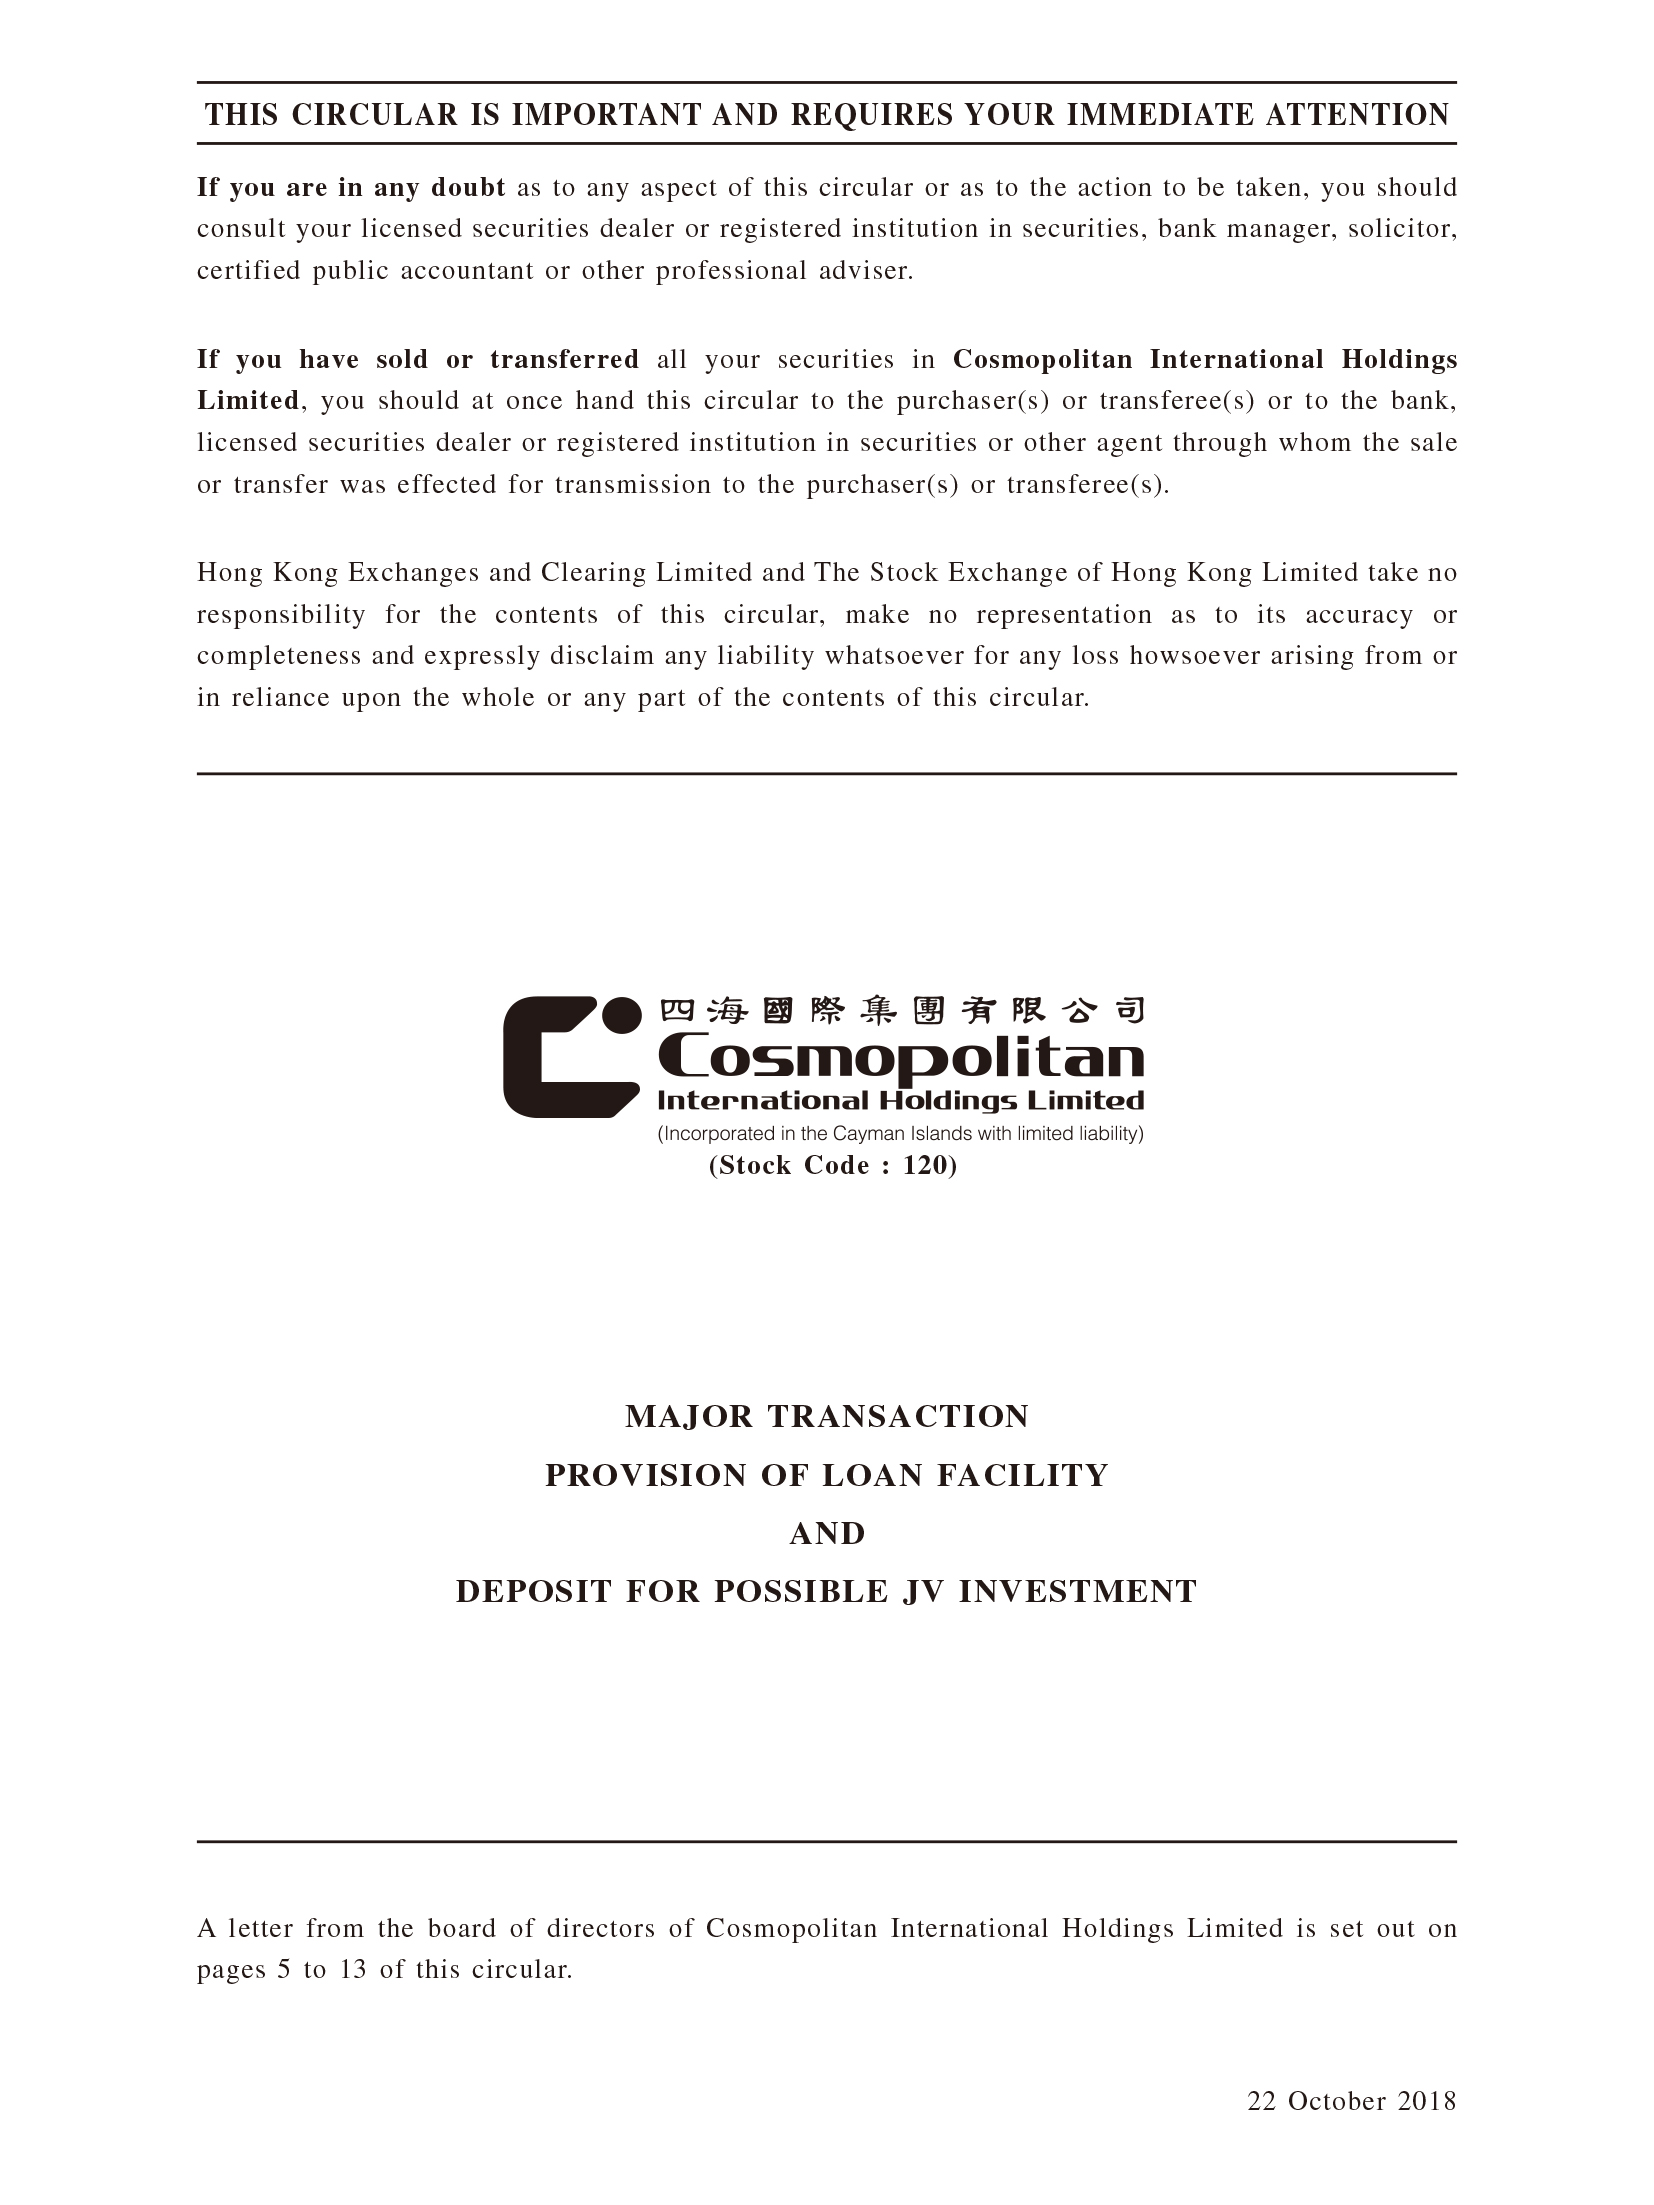 Cosmopolitan International Holdings Limited